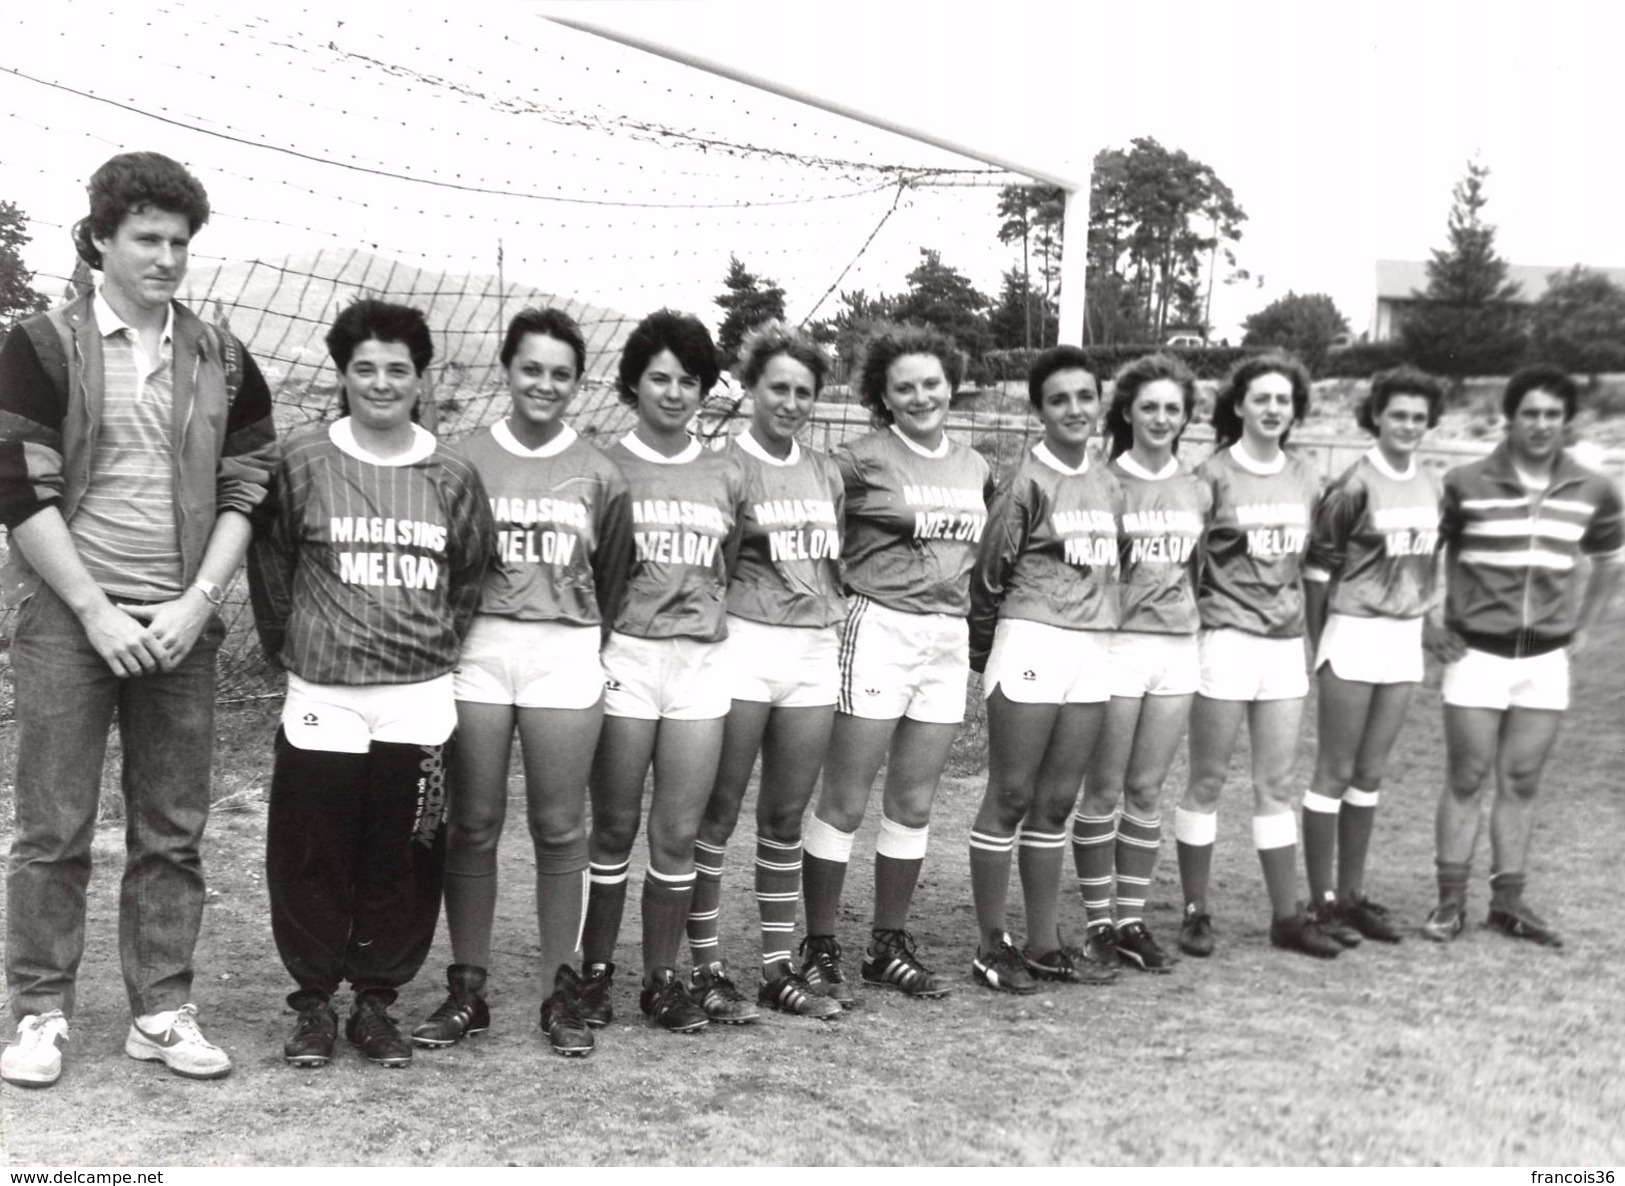 Lot de 46 moyennes / grandes photographies : Annonay - Equipes de Football - Foot 1982 1984 1985 A.S.R